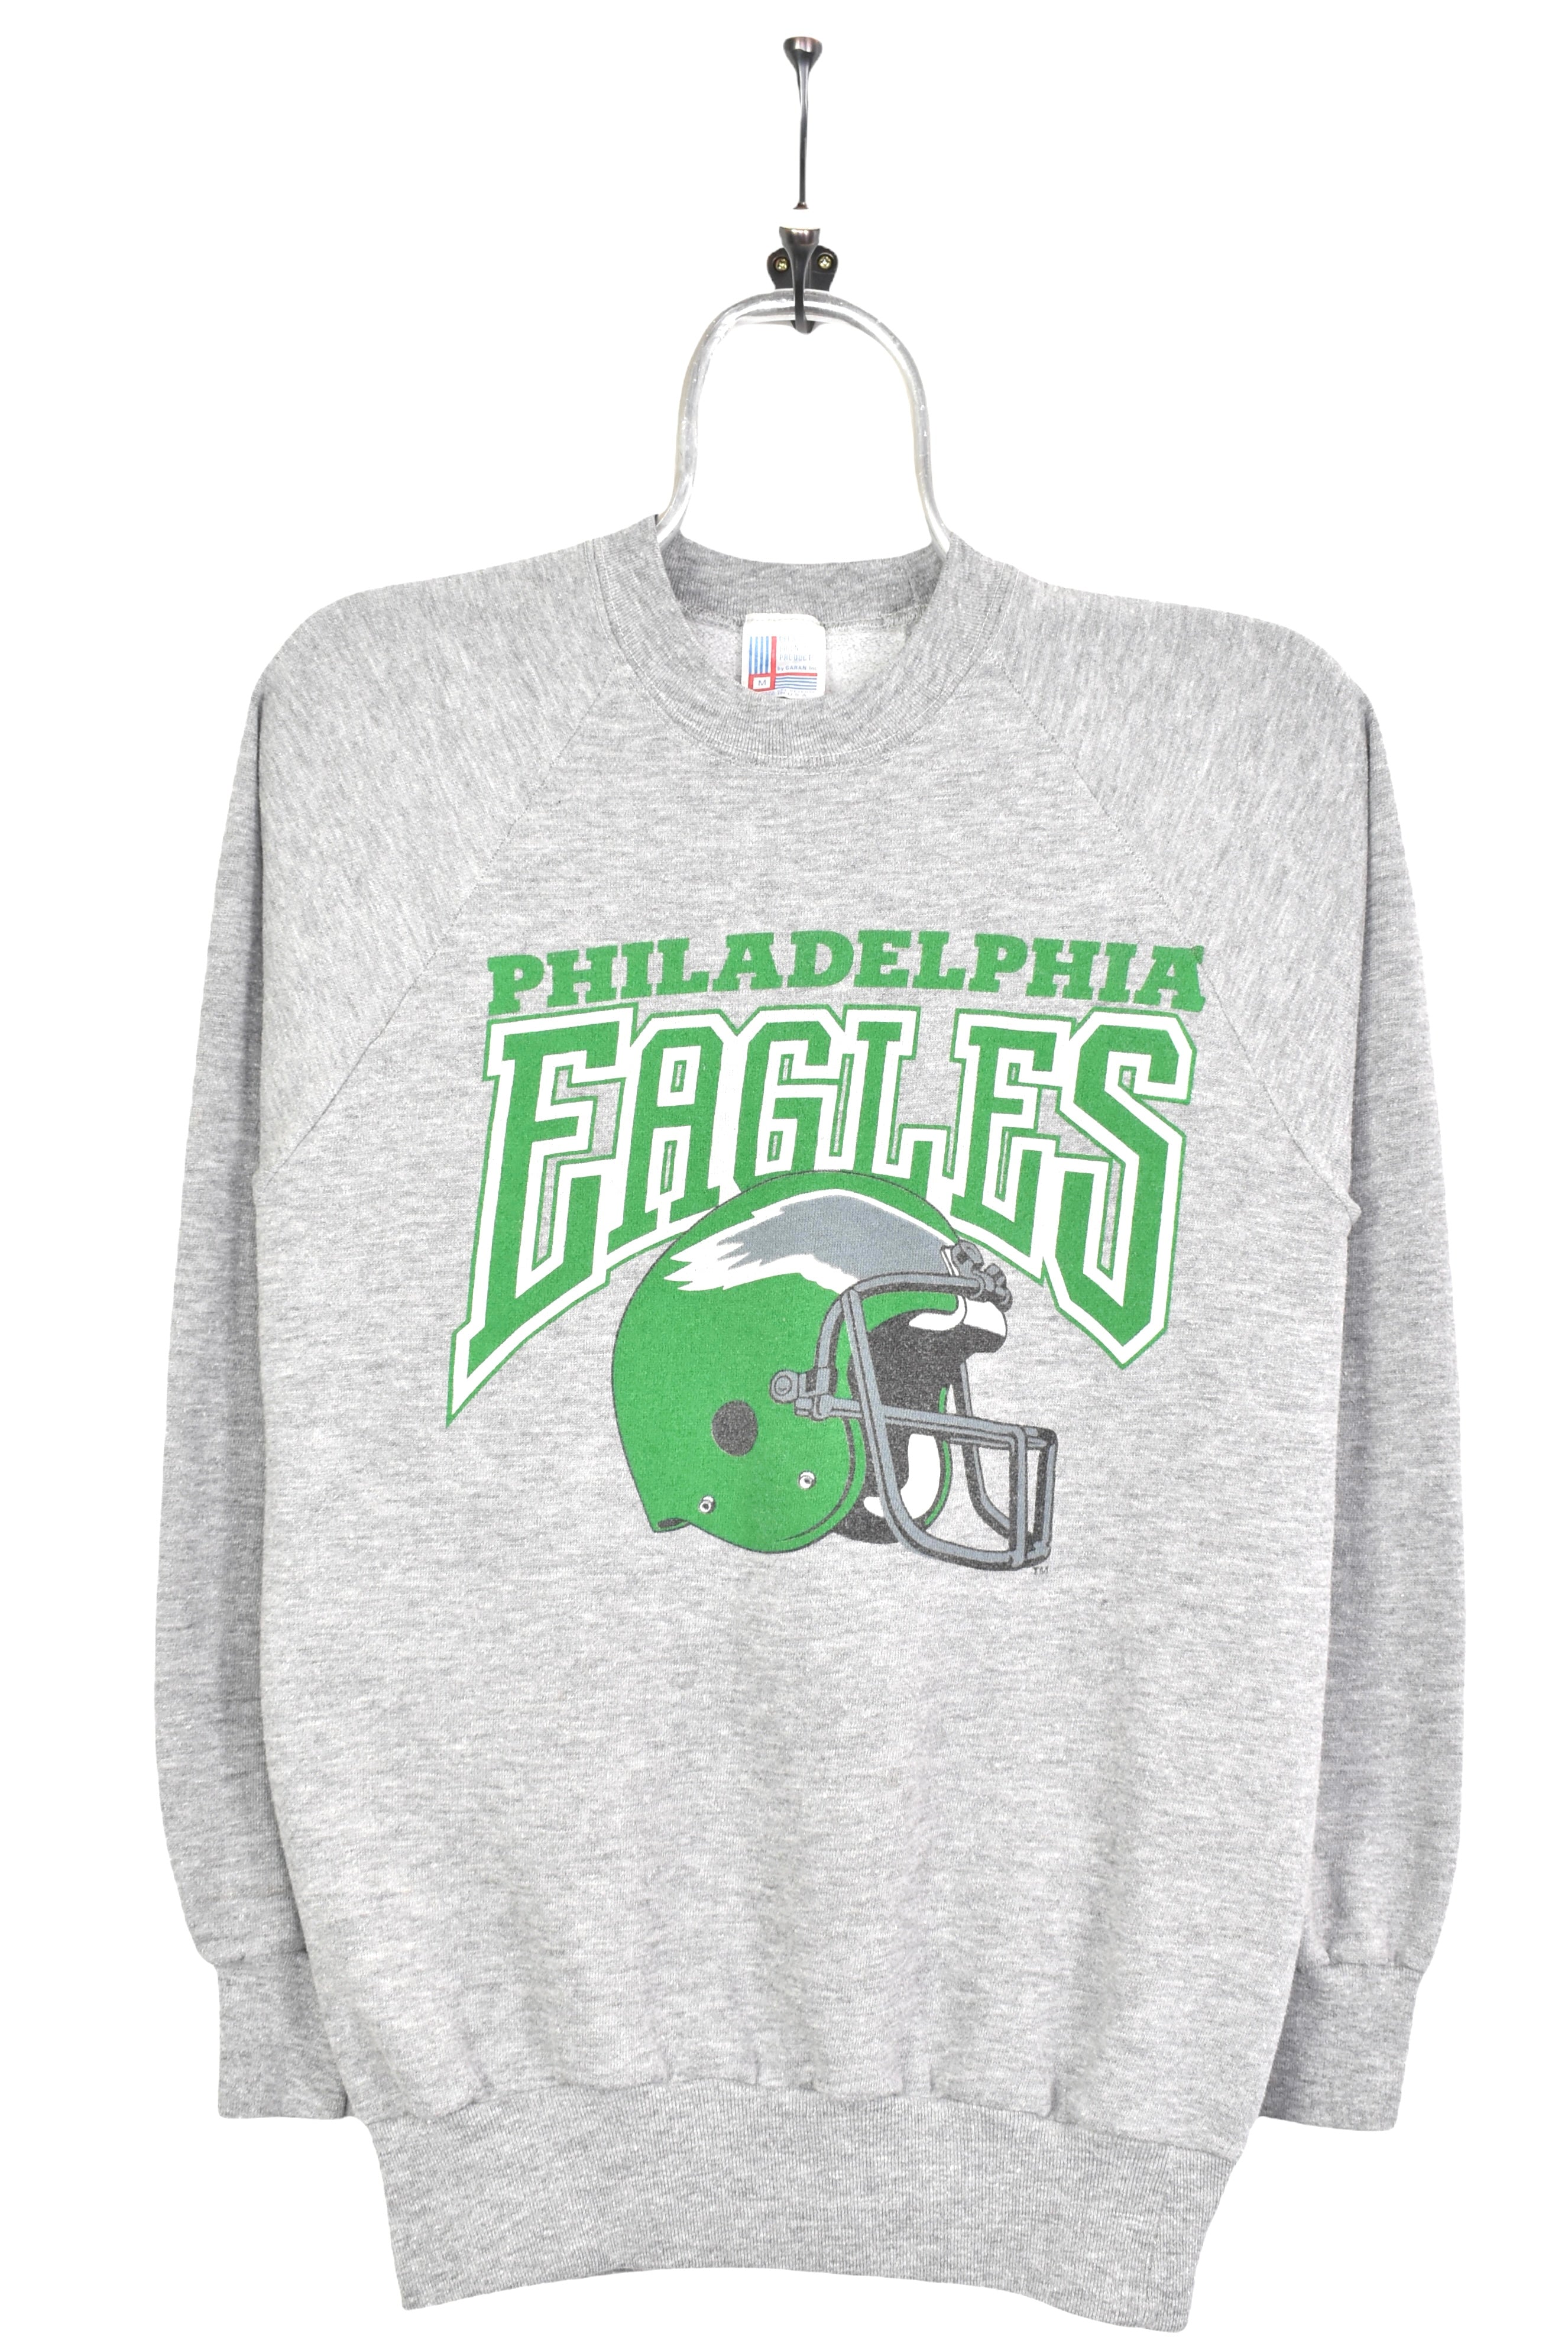 Vintage Philadelphia Eagles sweatshirt, 80s NFL graphic crewneck - XS, grey PRO SPORT